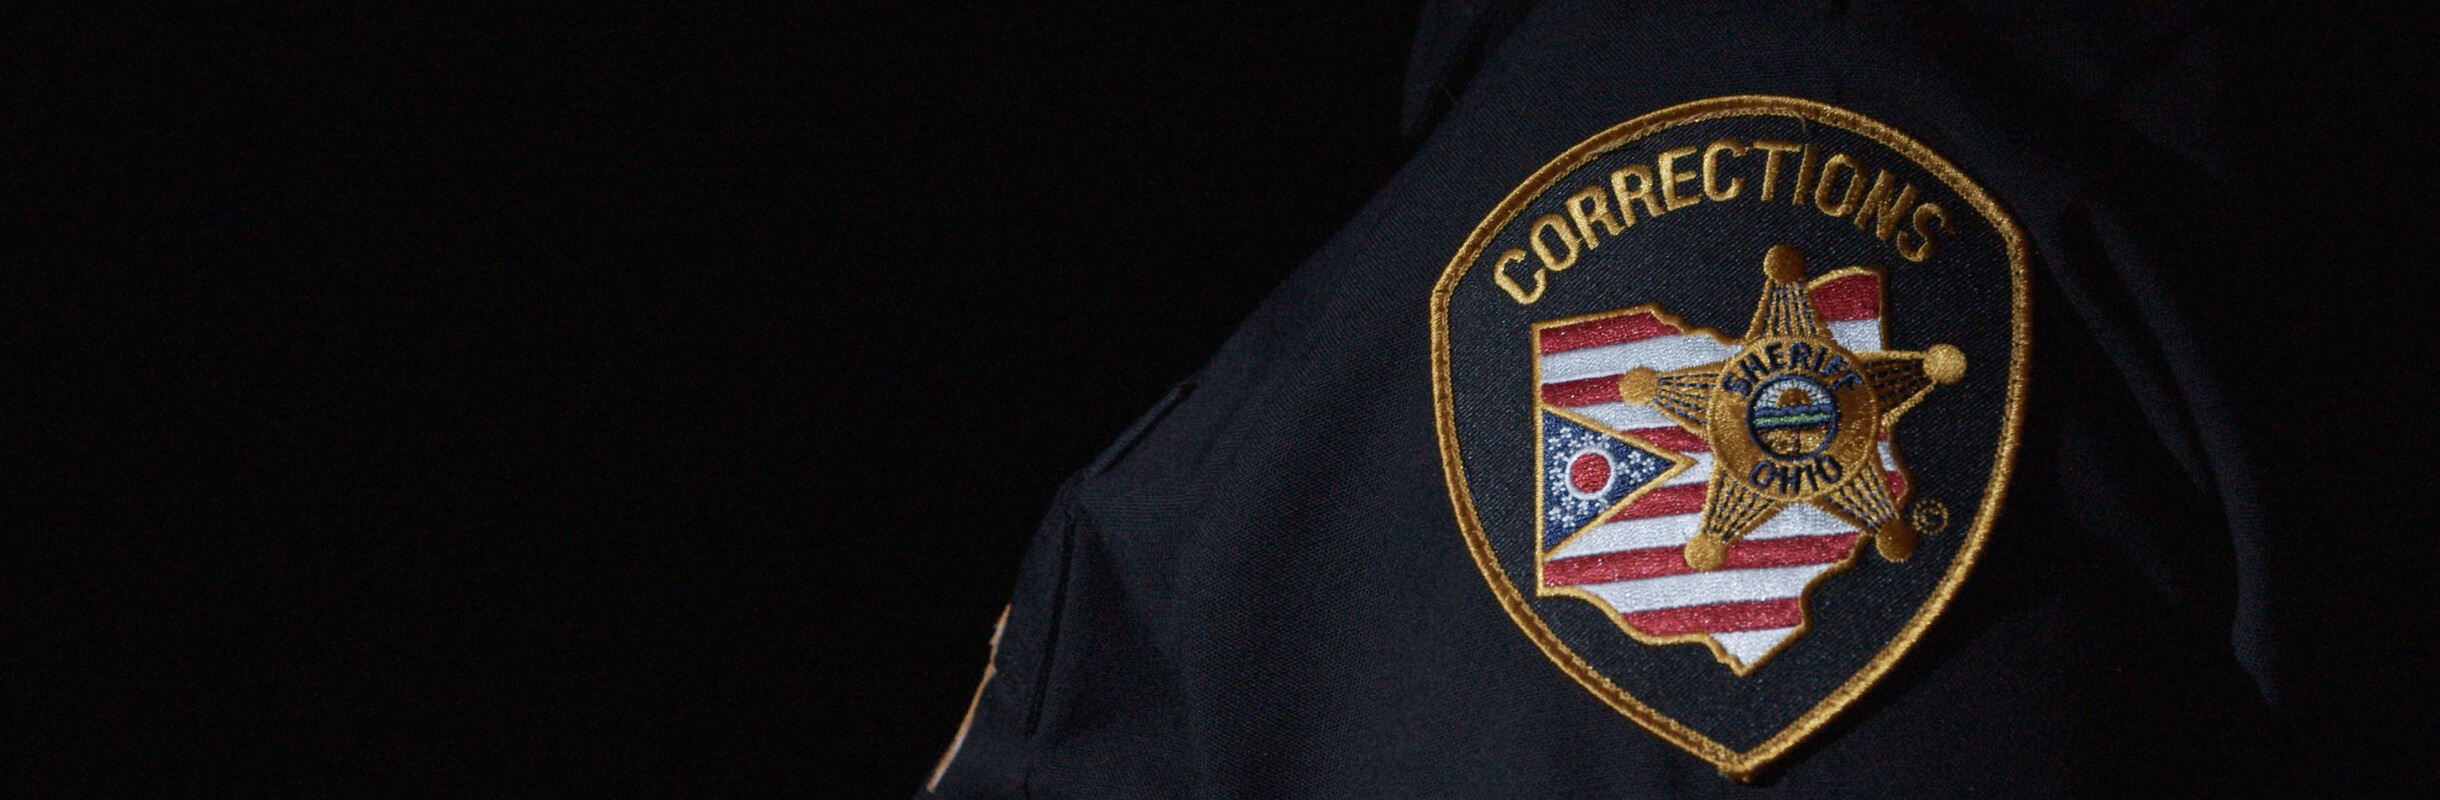 Lucas County Sheriff Logo on Uniform Arm